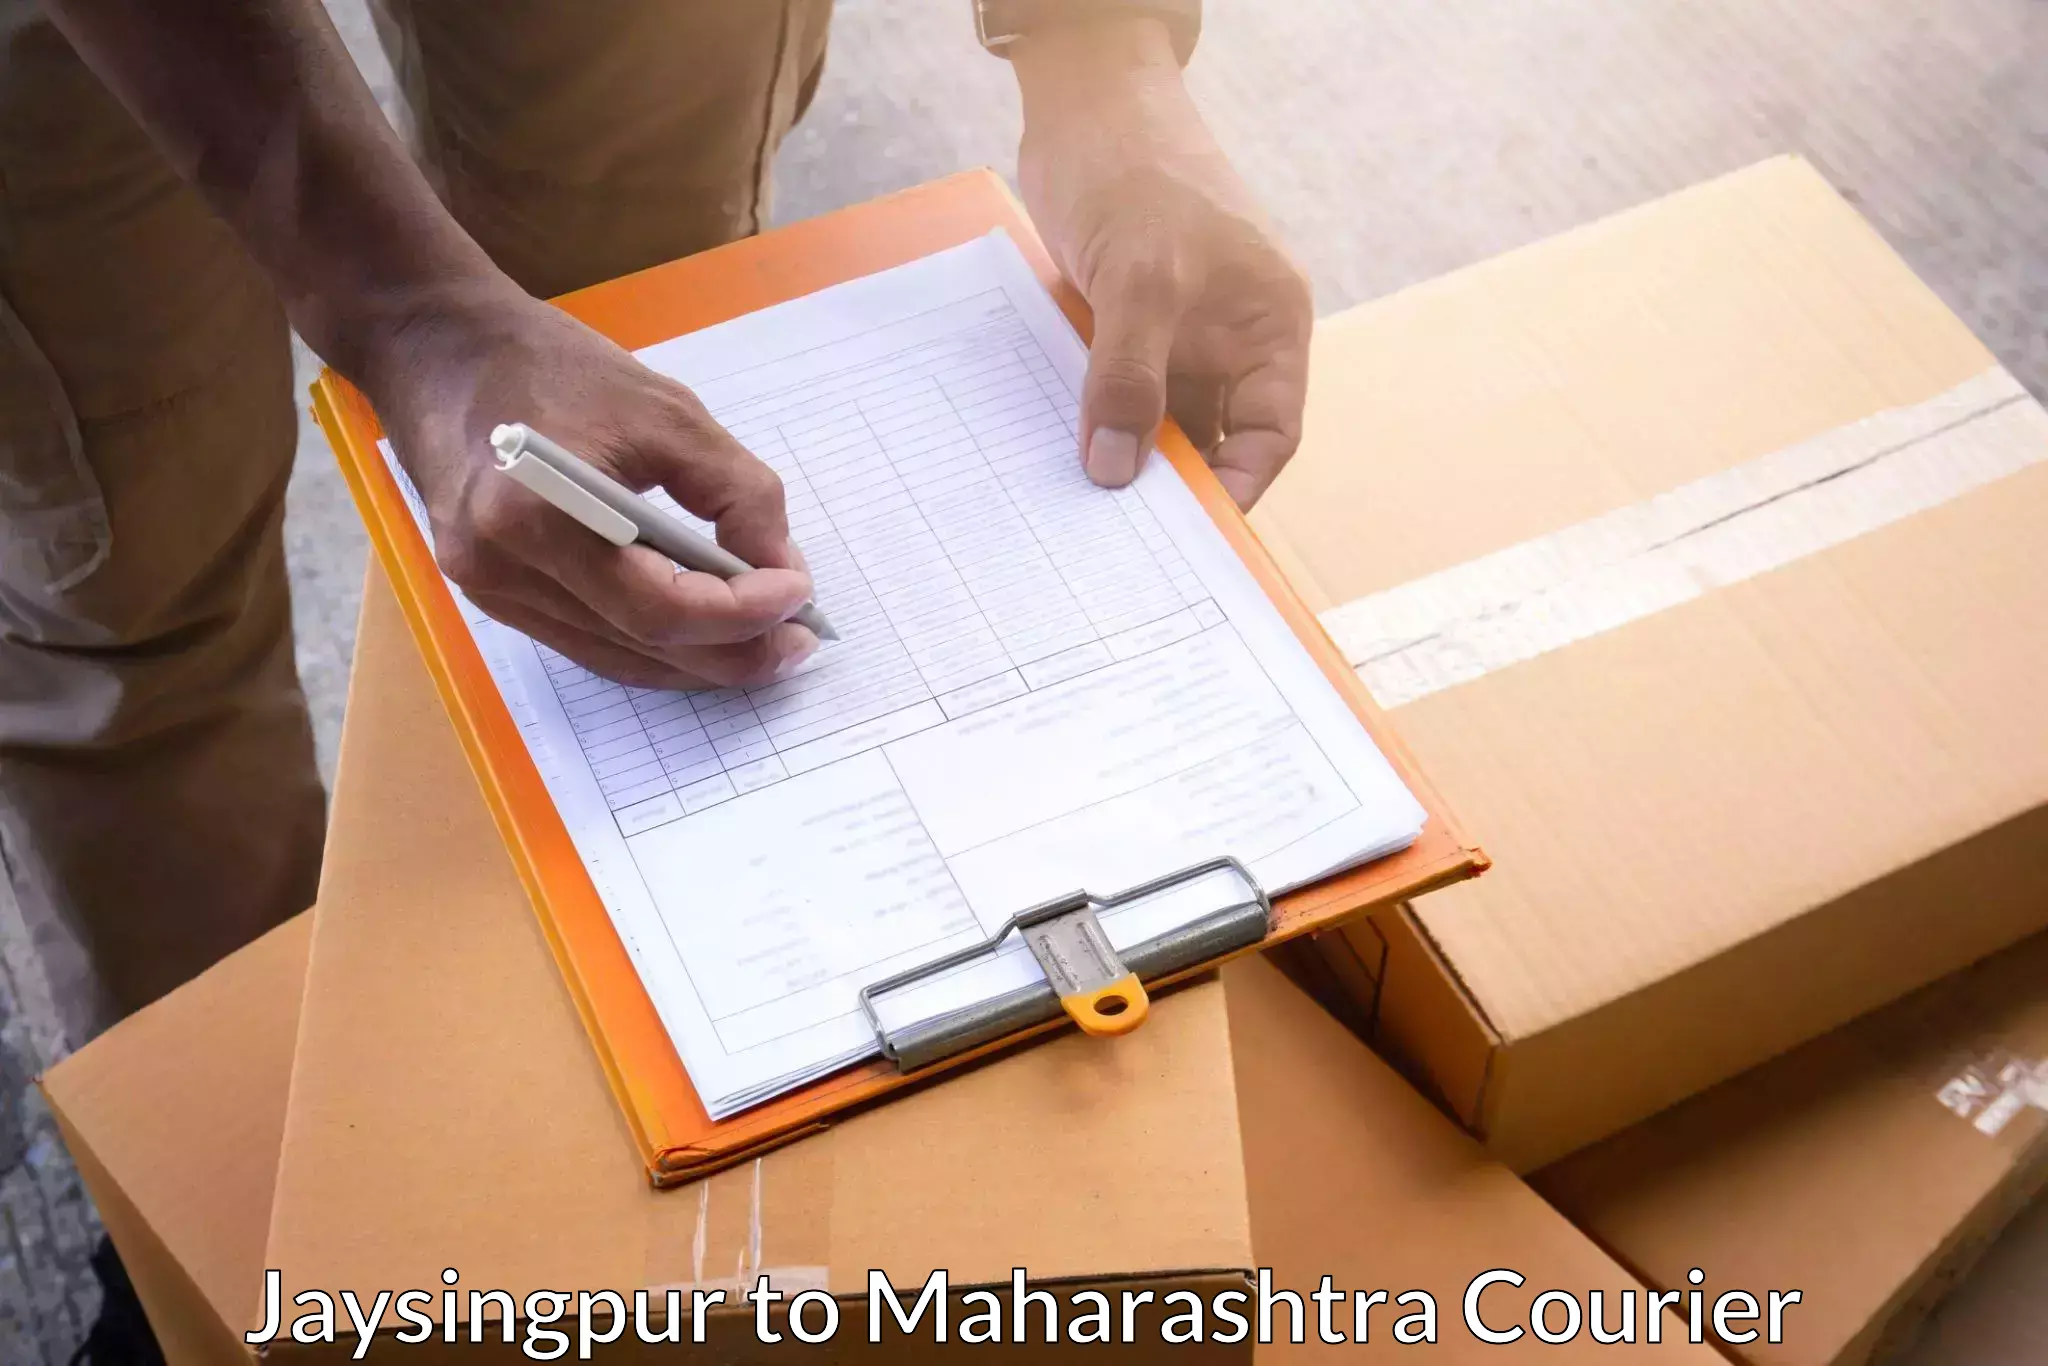 Cash on delivery service Jaysingpur to Lasalgaon